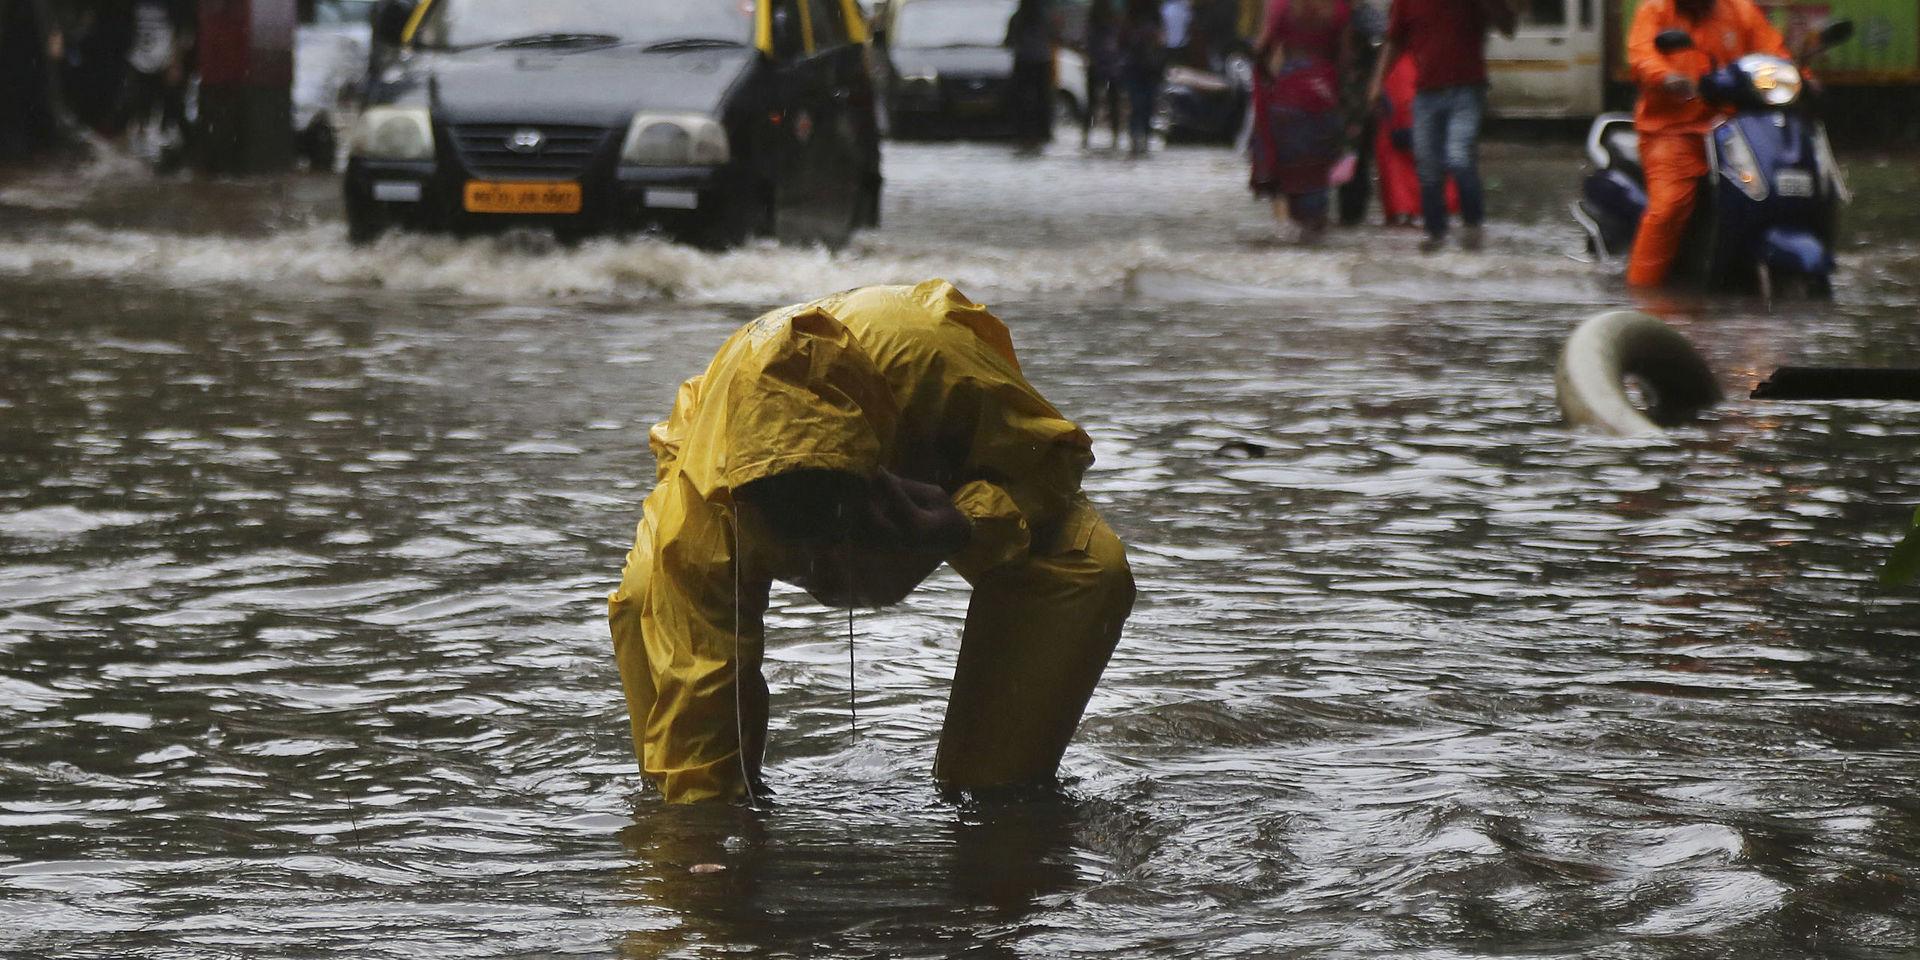 En indisk pojke har fallit ner i en brunn i Bombay efter sommarens kraftiga monsunregn. Bild från 8 juli 2019.